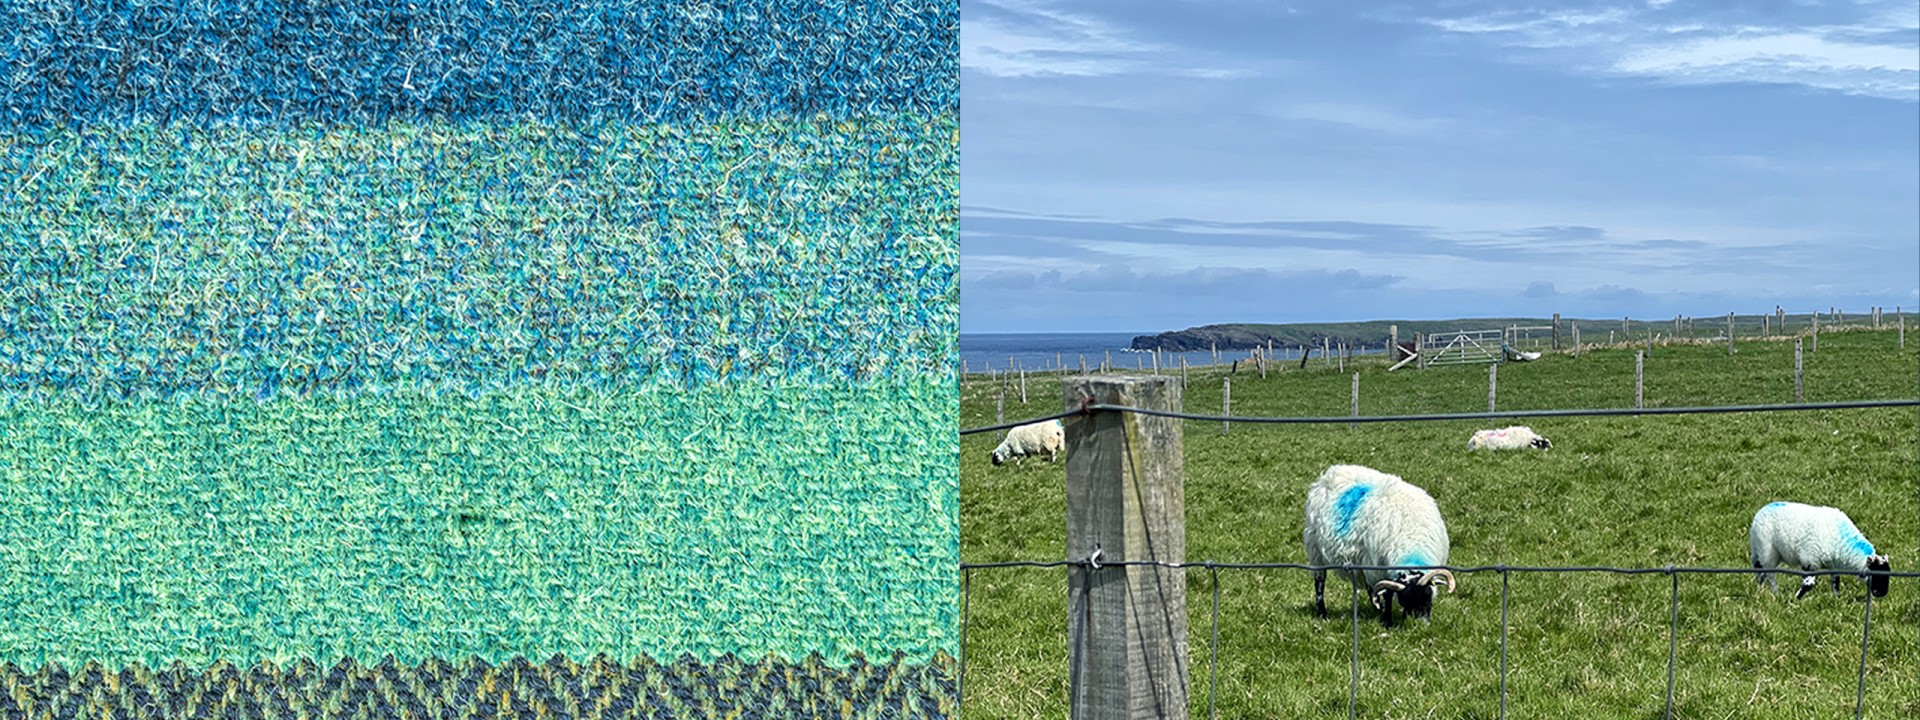 Colour match sheep layers